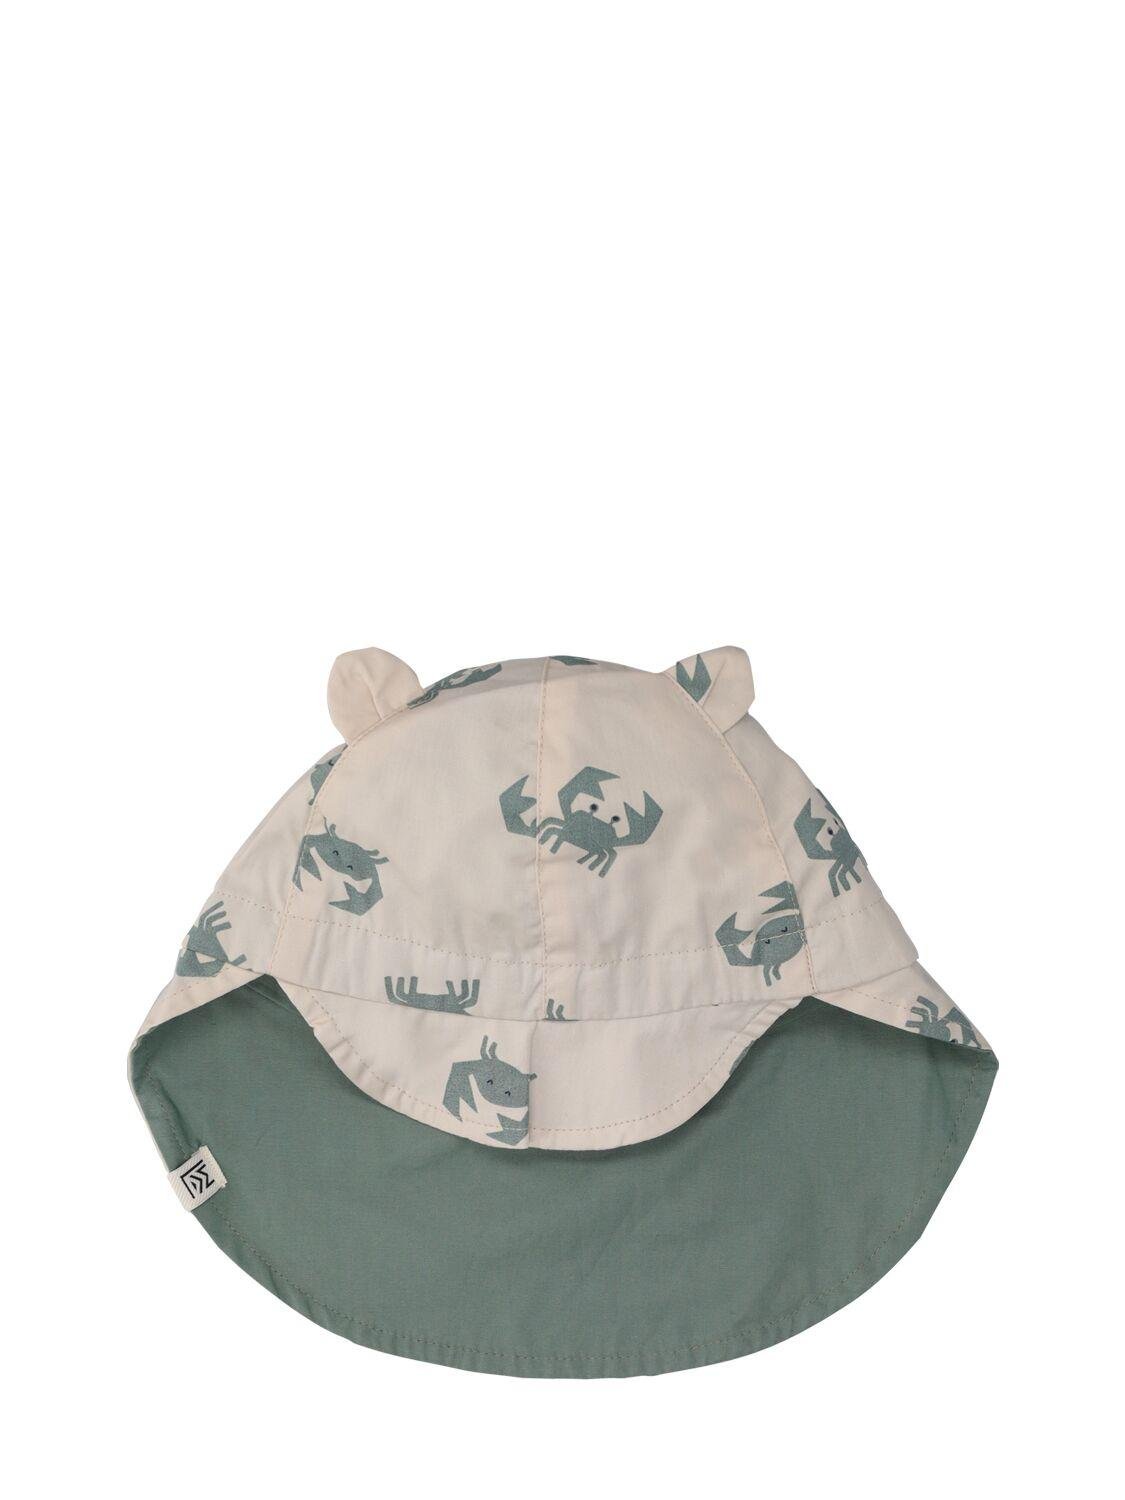 Crab Print Reversible Organic Cotton Hat by LIEWOOD